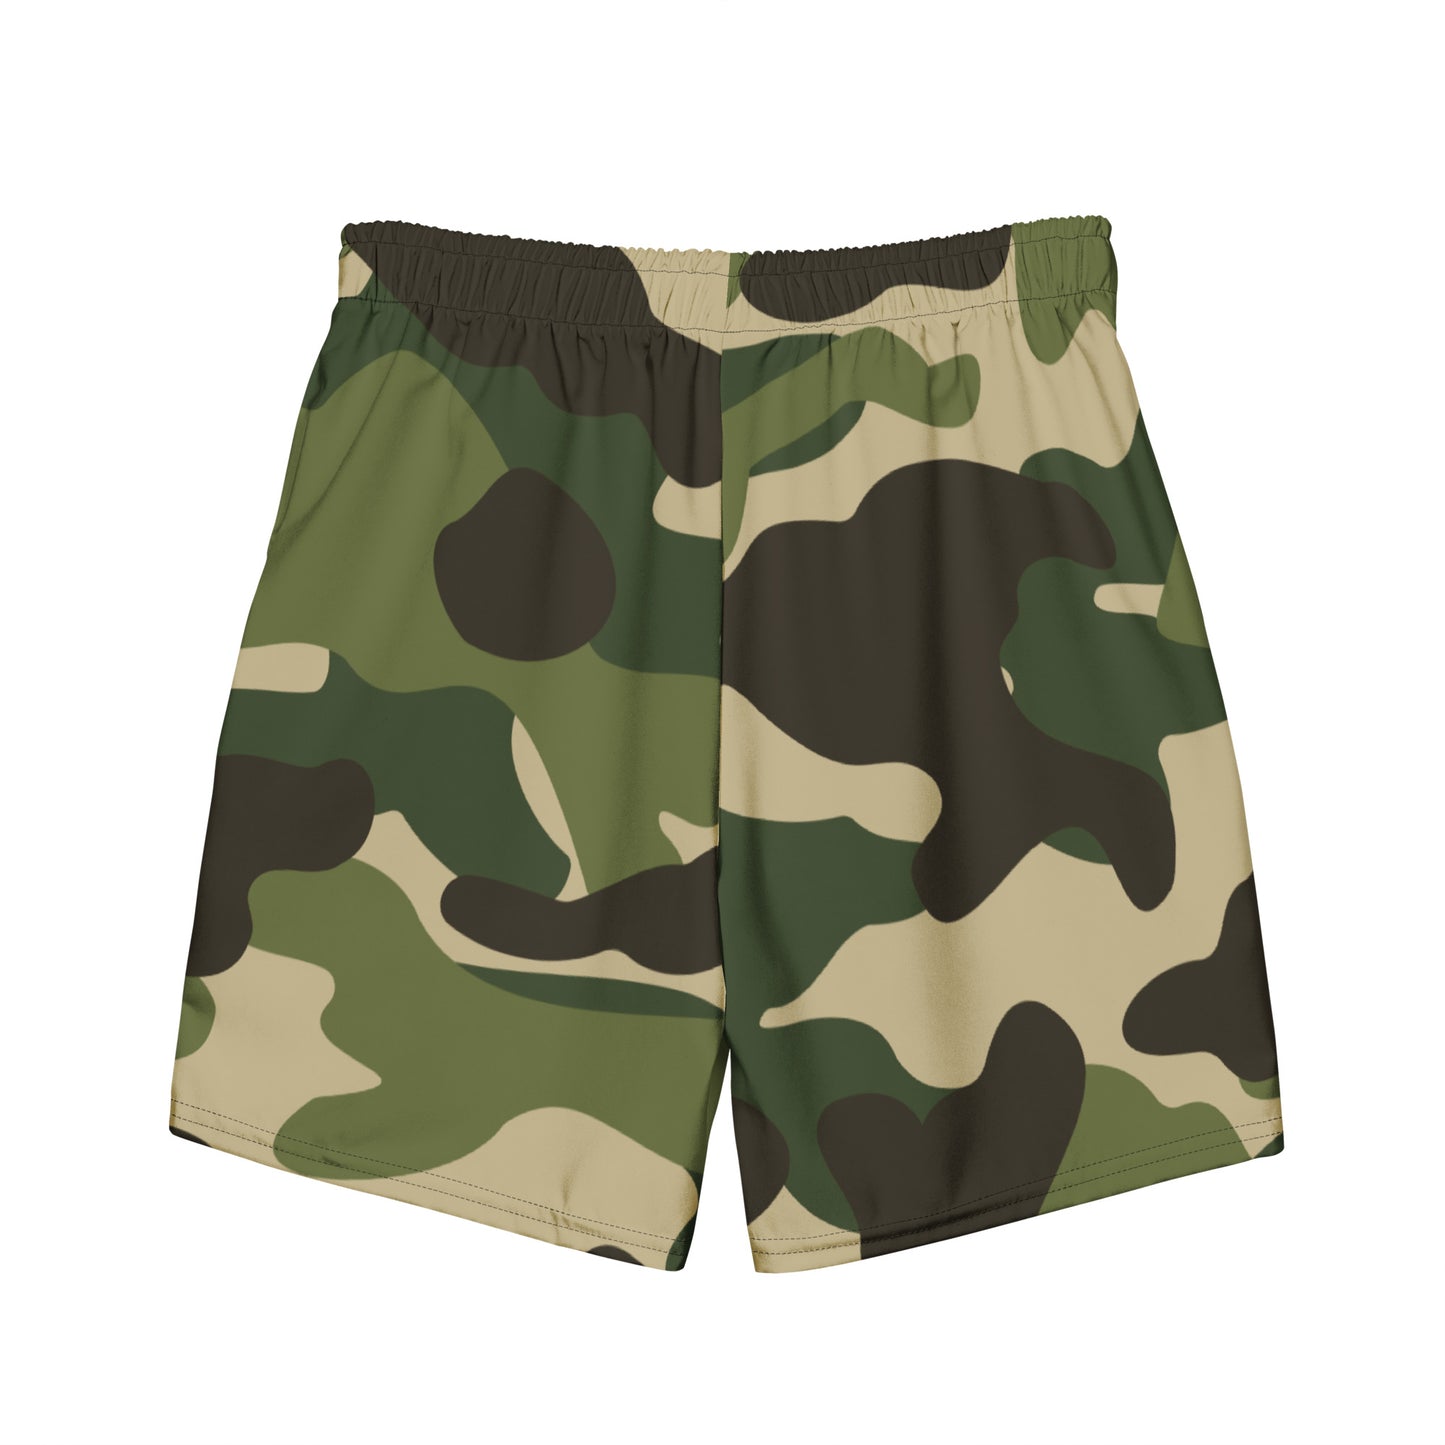 Army - Sustainably Made Men's swim trunks